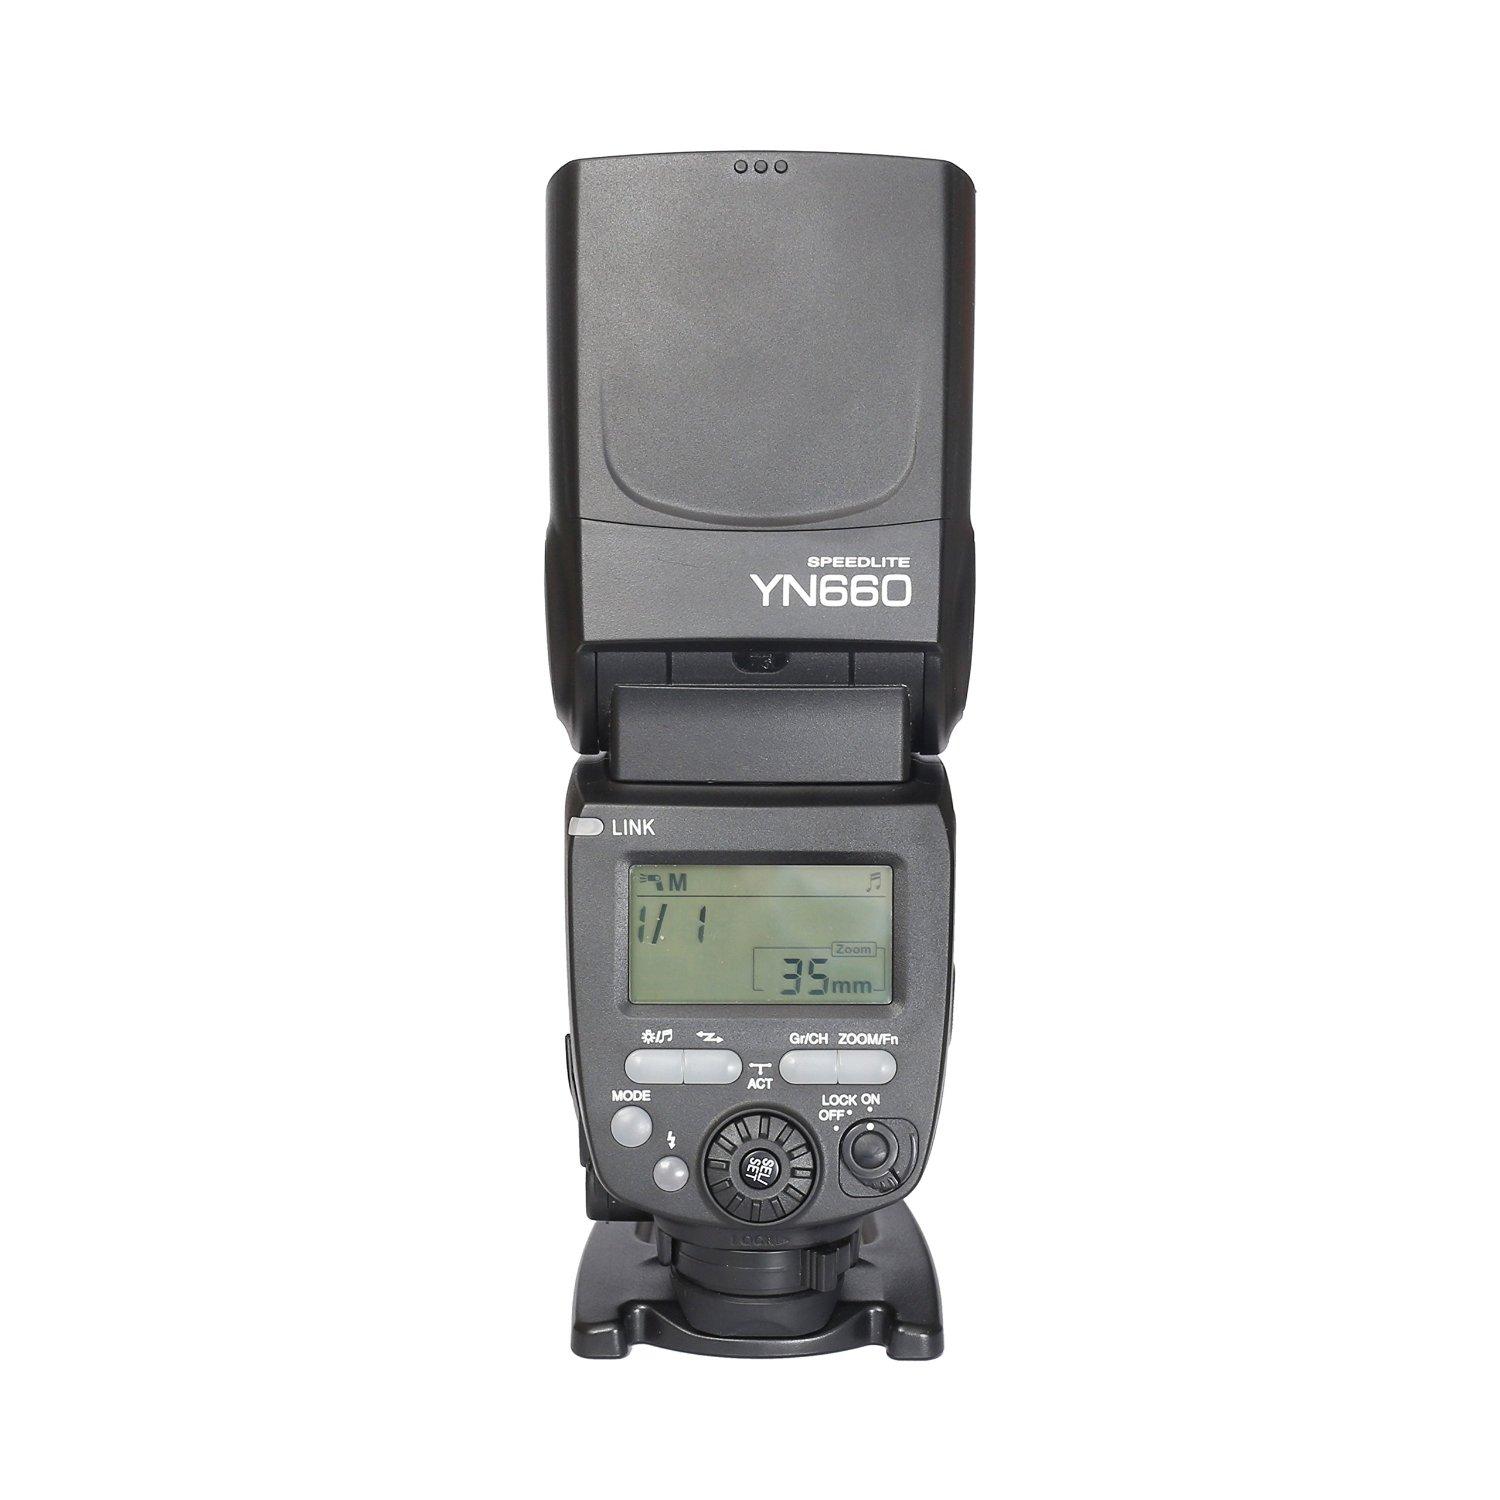 

Yongnuo YN660 Wireless GN66 2.4G Flash Speedlite для Canon Nikon Pentax Cameras